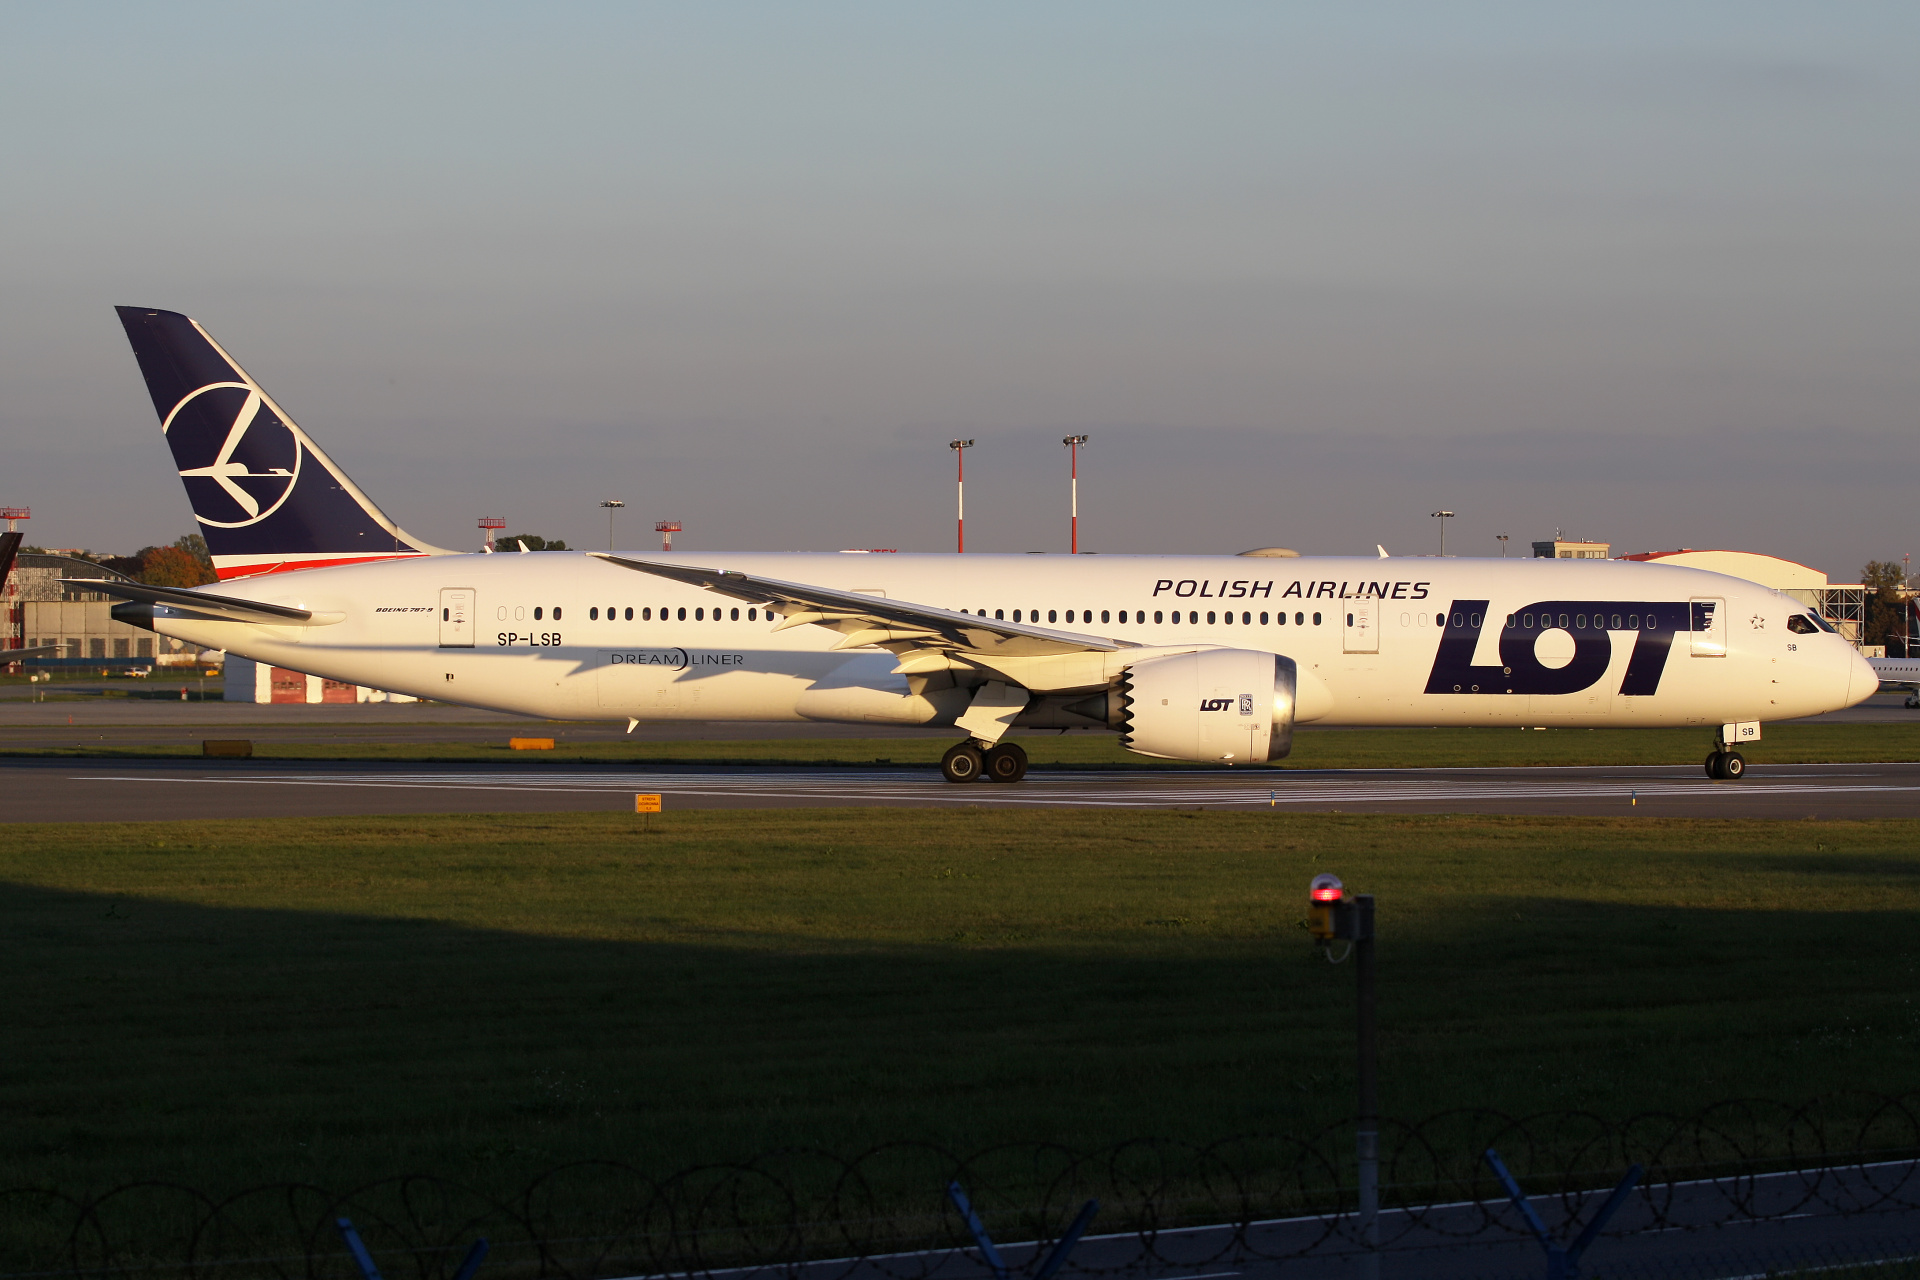 SP-LSB (Samoloty » Spotting na EPWA » Boeing 787-9 Dreamliner » Polskie Linie Lotnicze LOT)